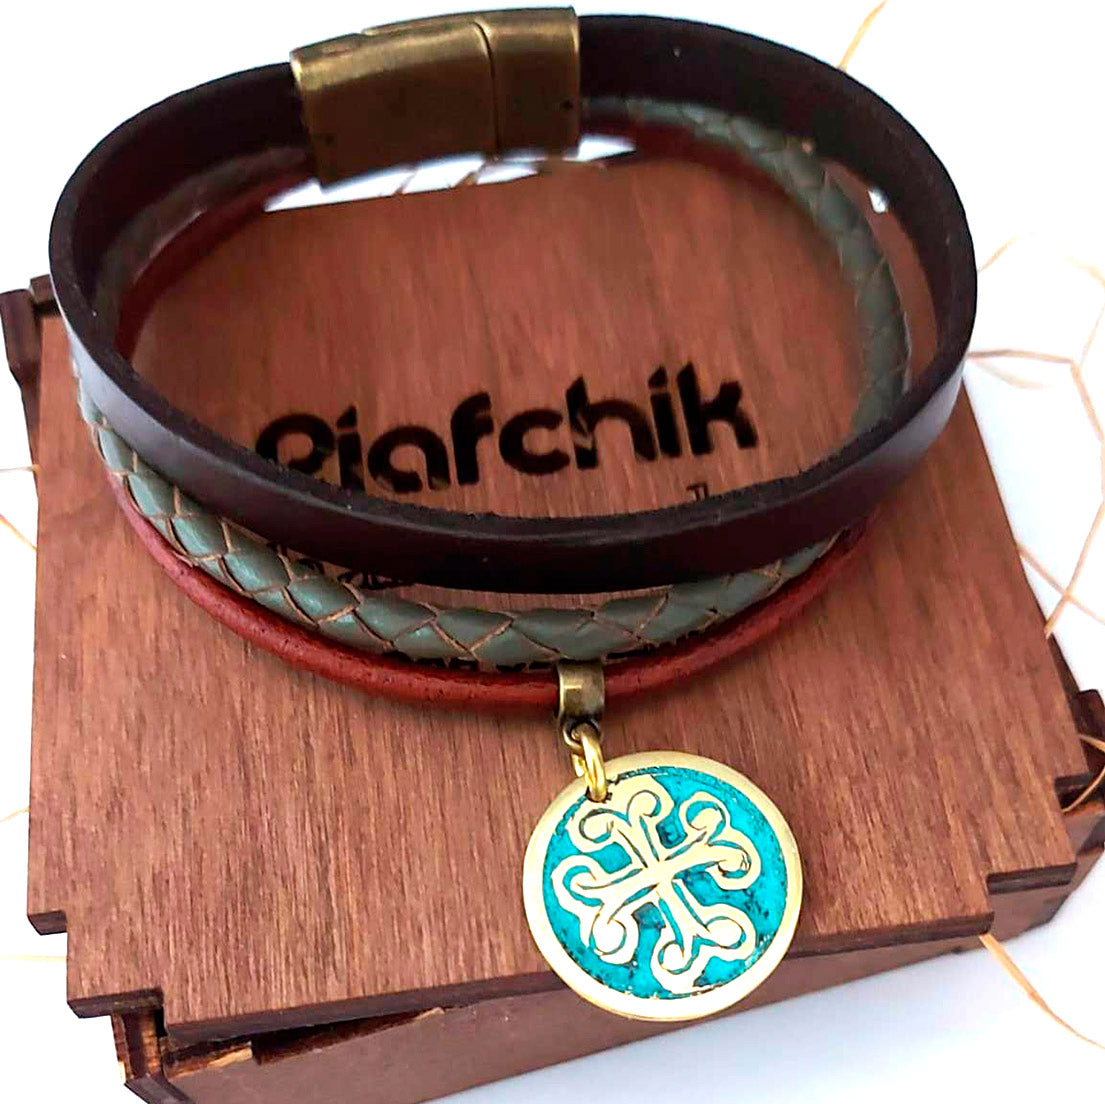 Leather bracelet PIAFCHIK with charm